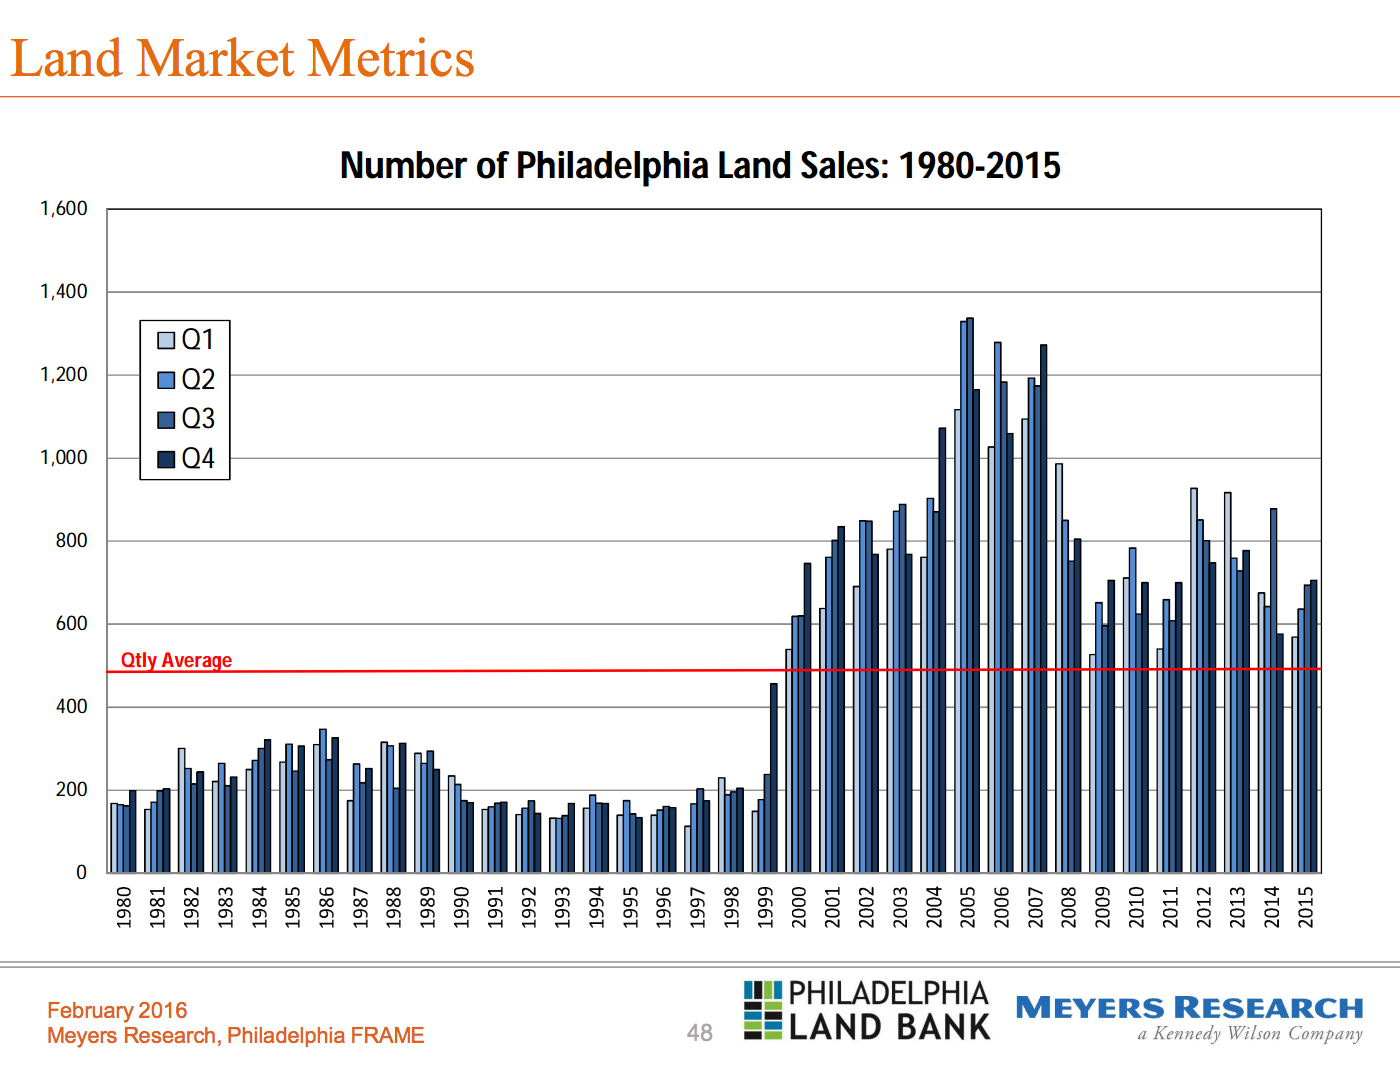 Number of Philadelphia land sales: 1980-2015